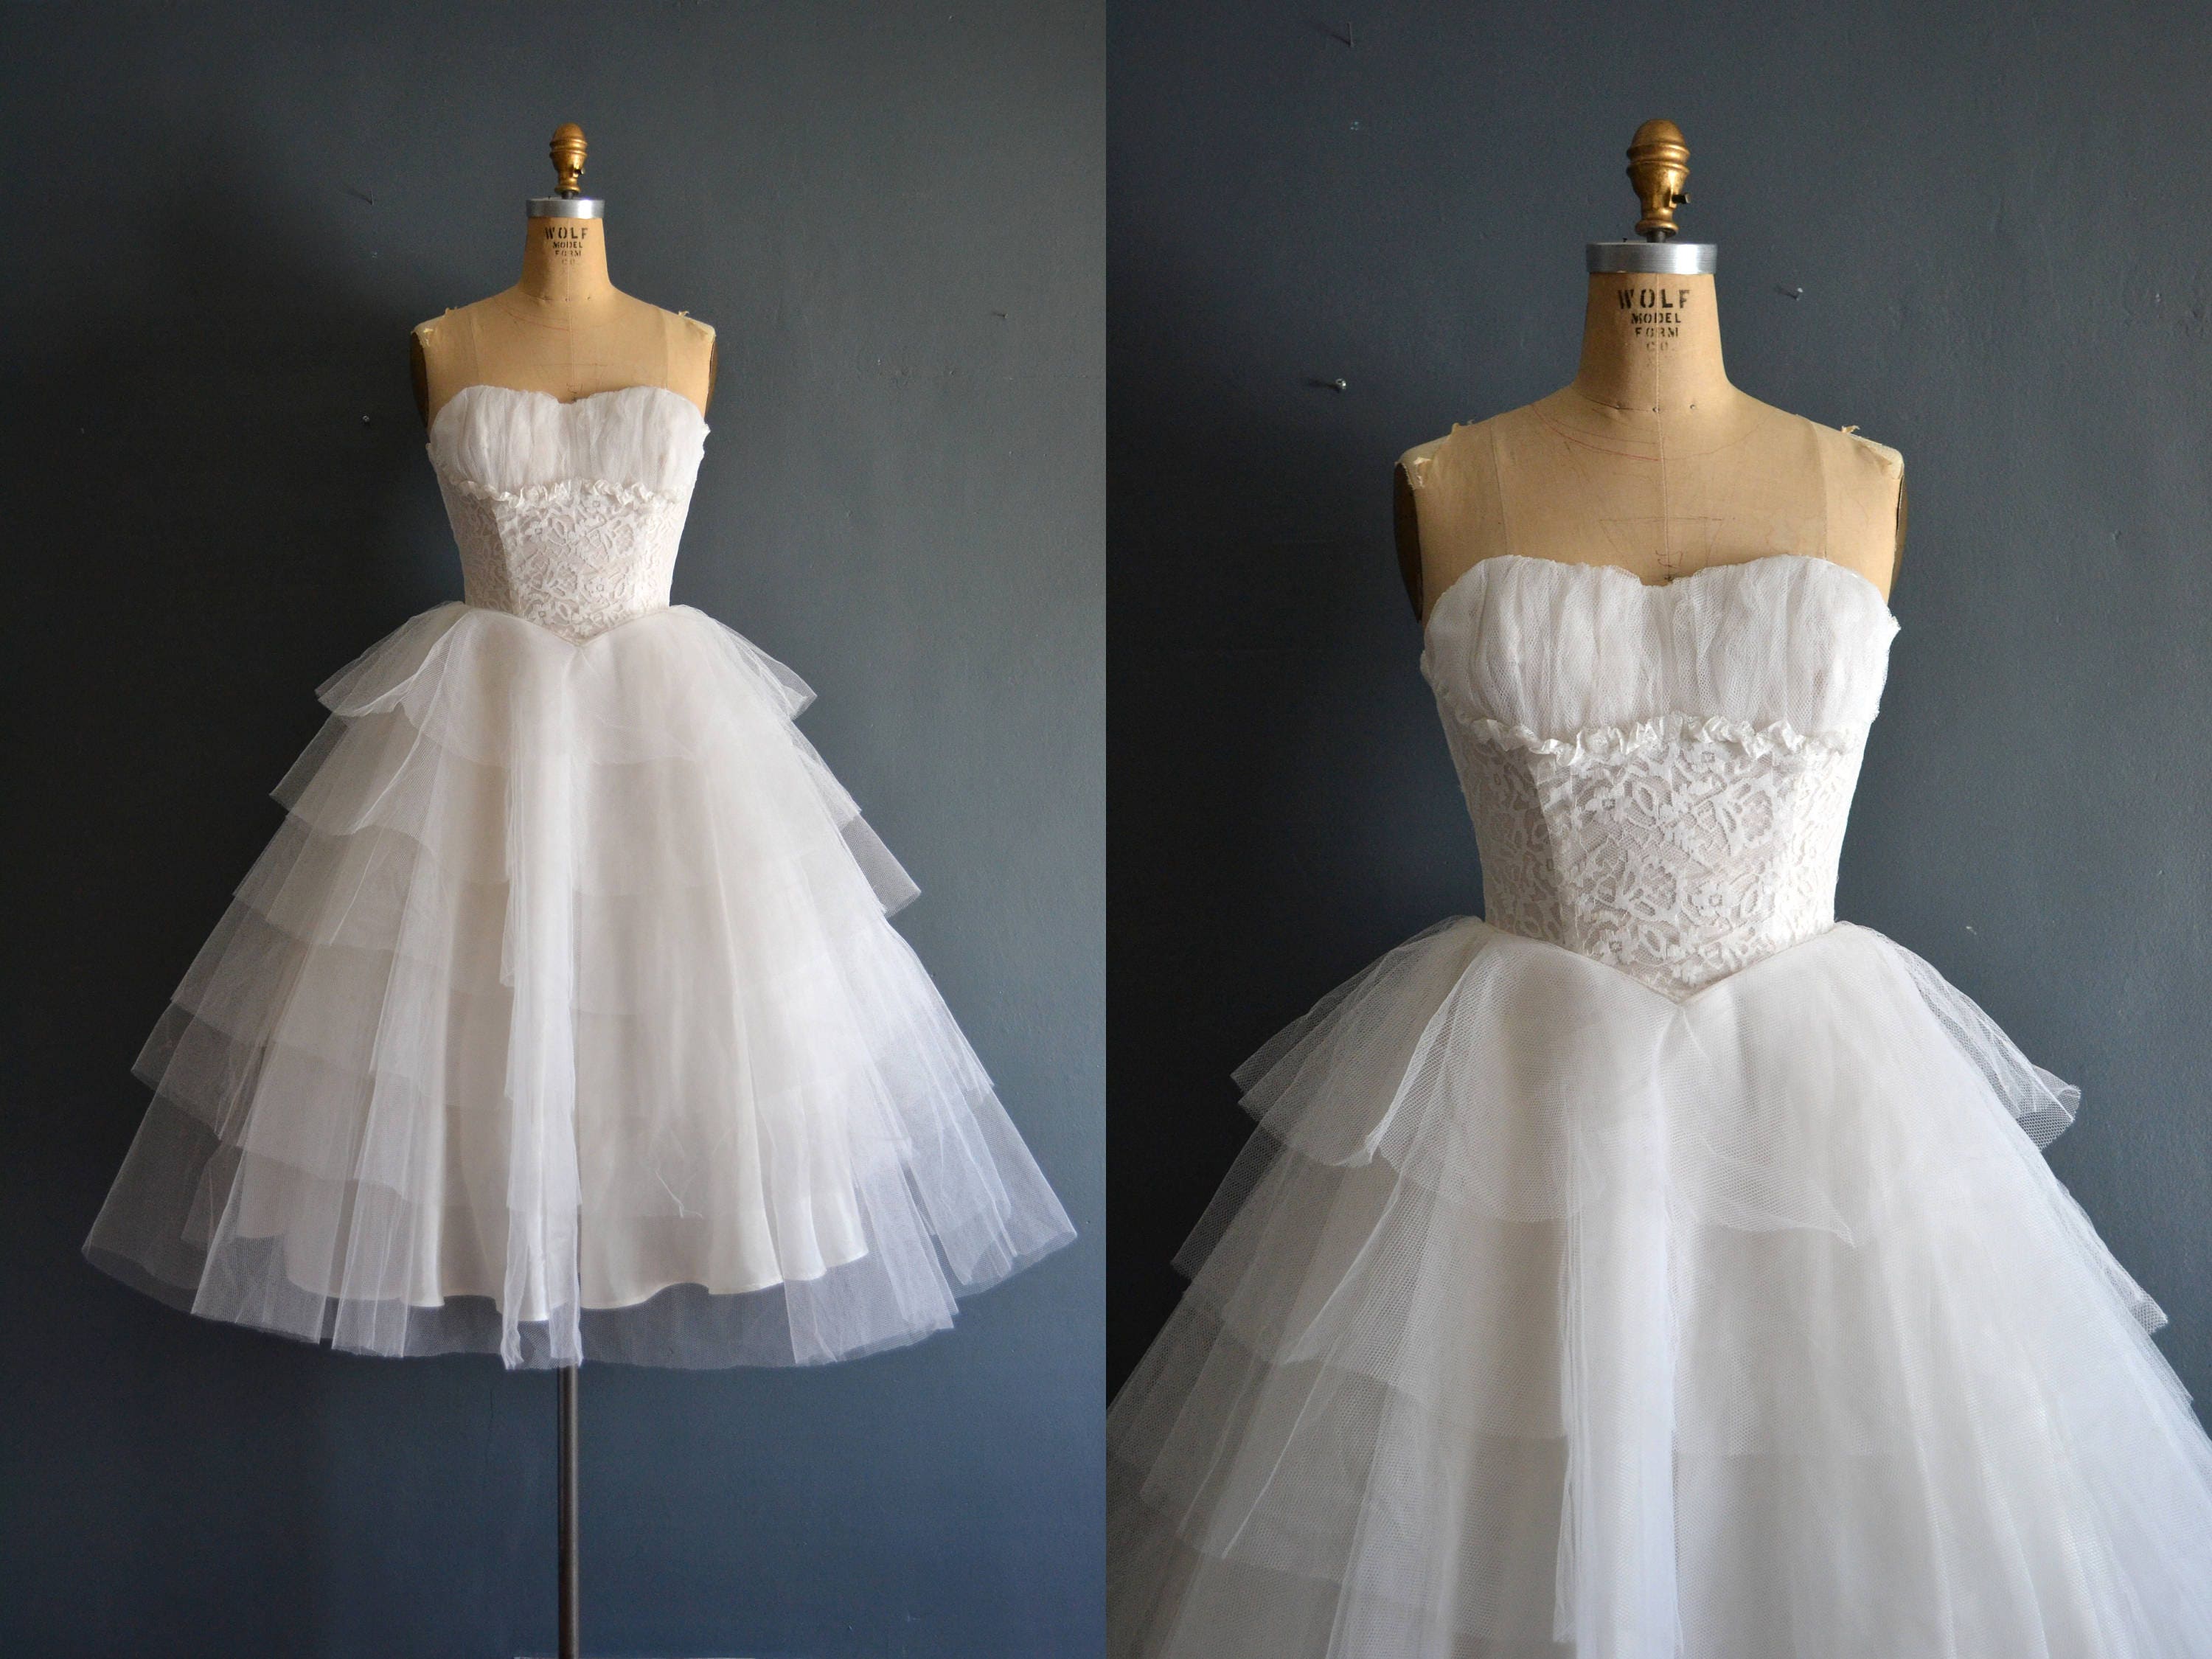 Edna / 50s wedding dress / vintage 1950s wedding dress